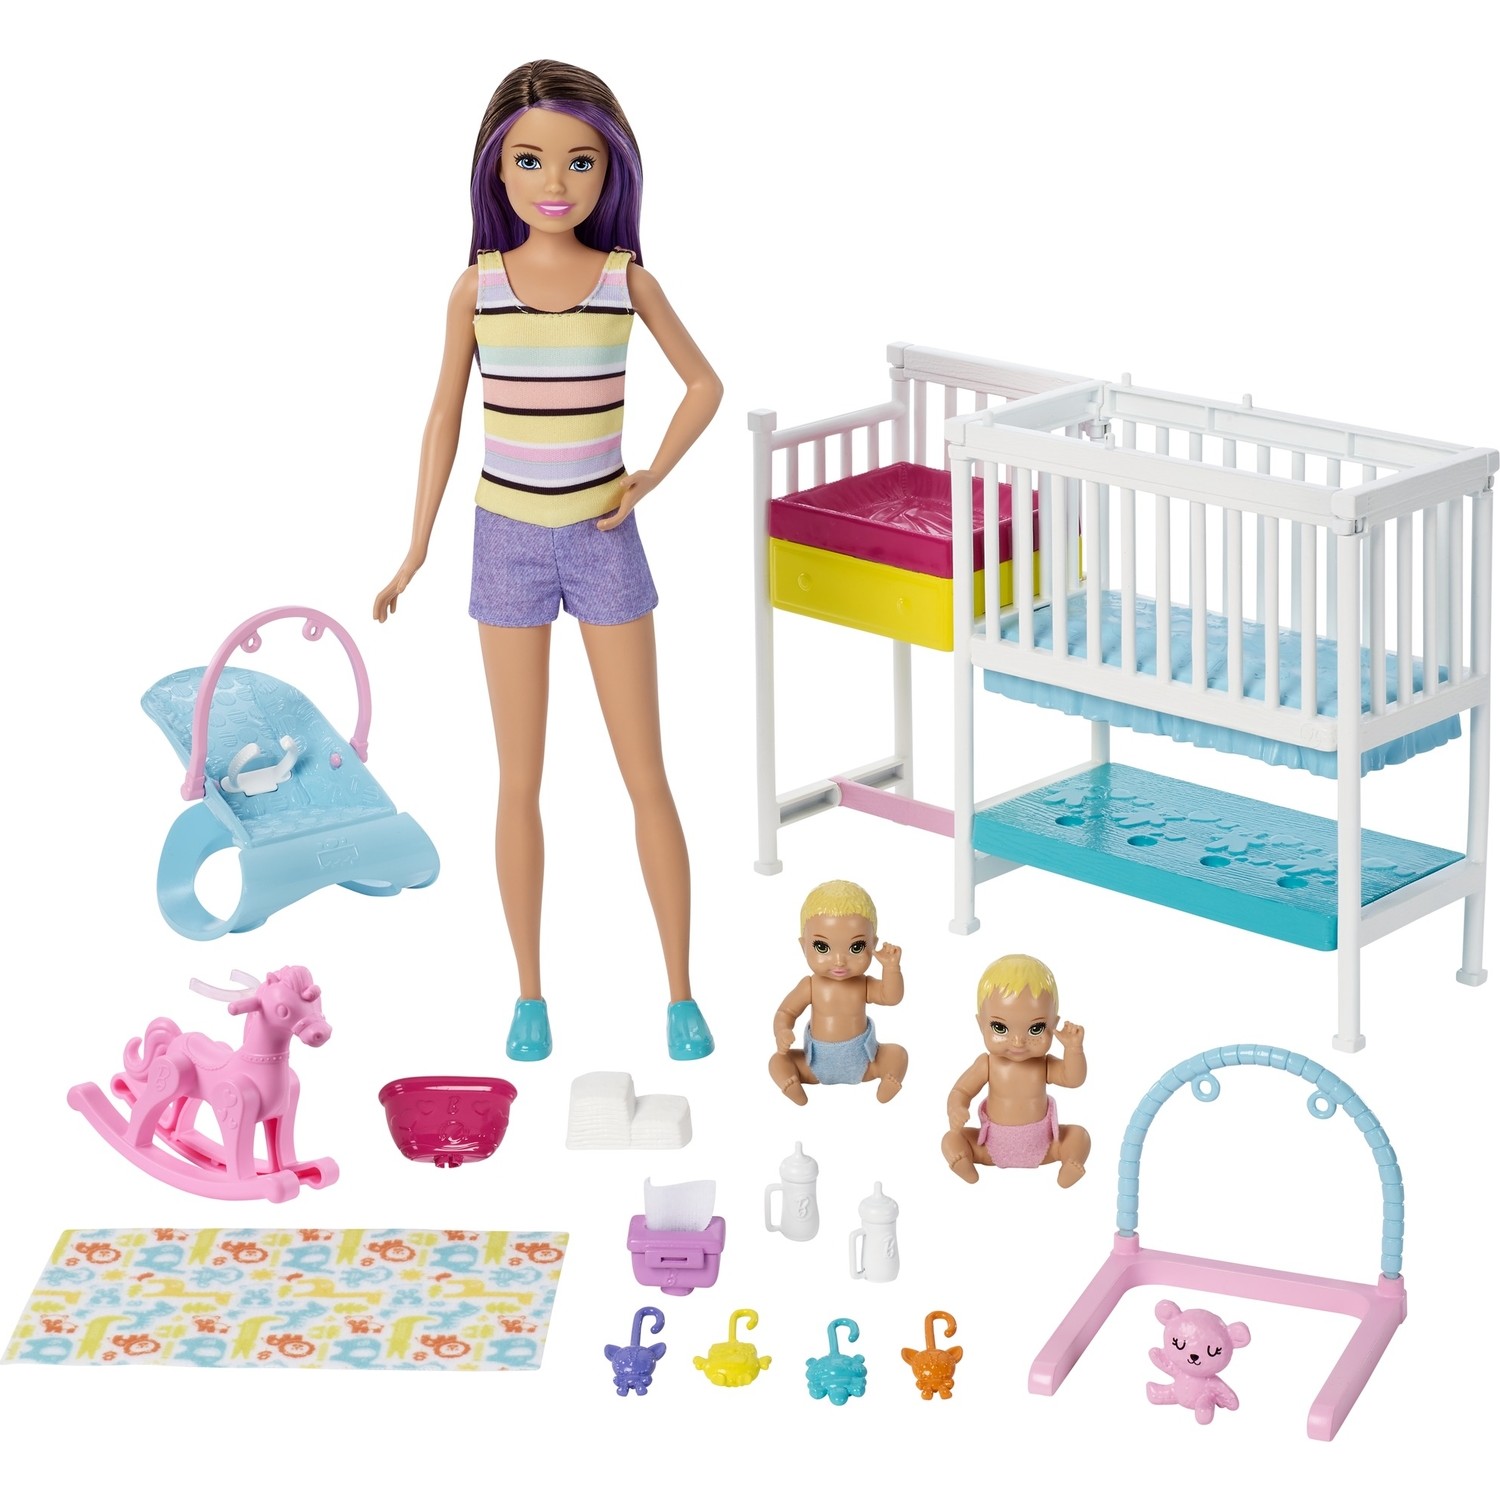 Игровой набор Barbie Skipper Babysitters набор игровой barbie pets s2 dreamhouse